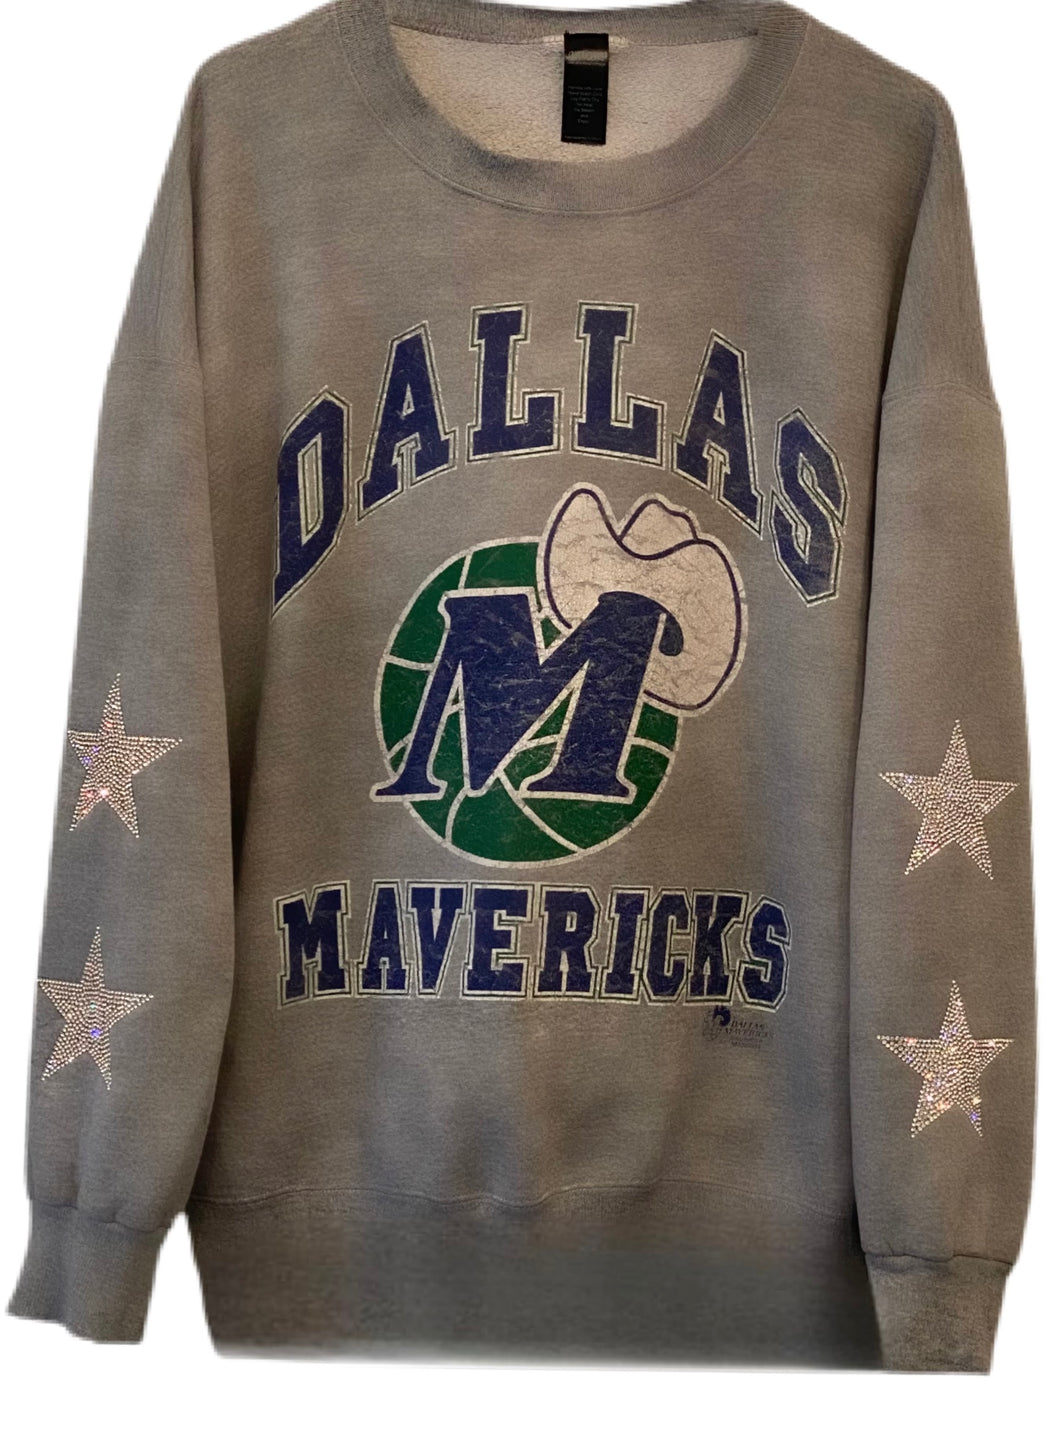 Dallas Mavericks, NBA One of a KIND Vintage Sweatshirt with Crystal Star Design